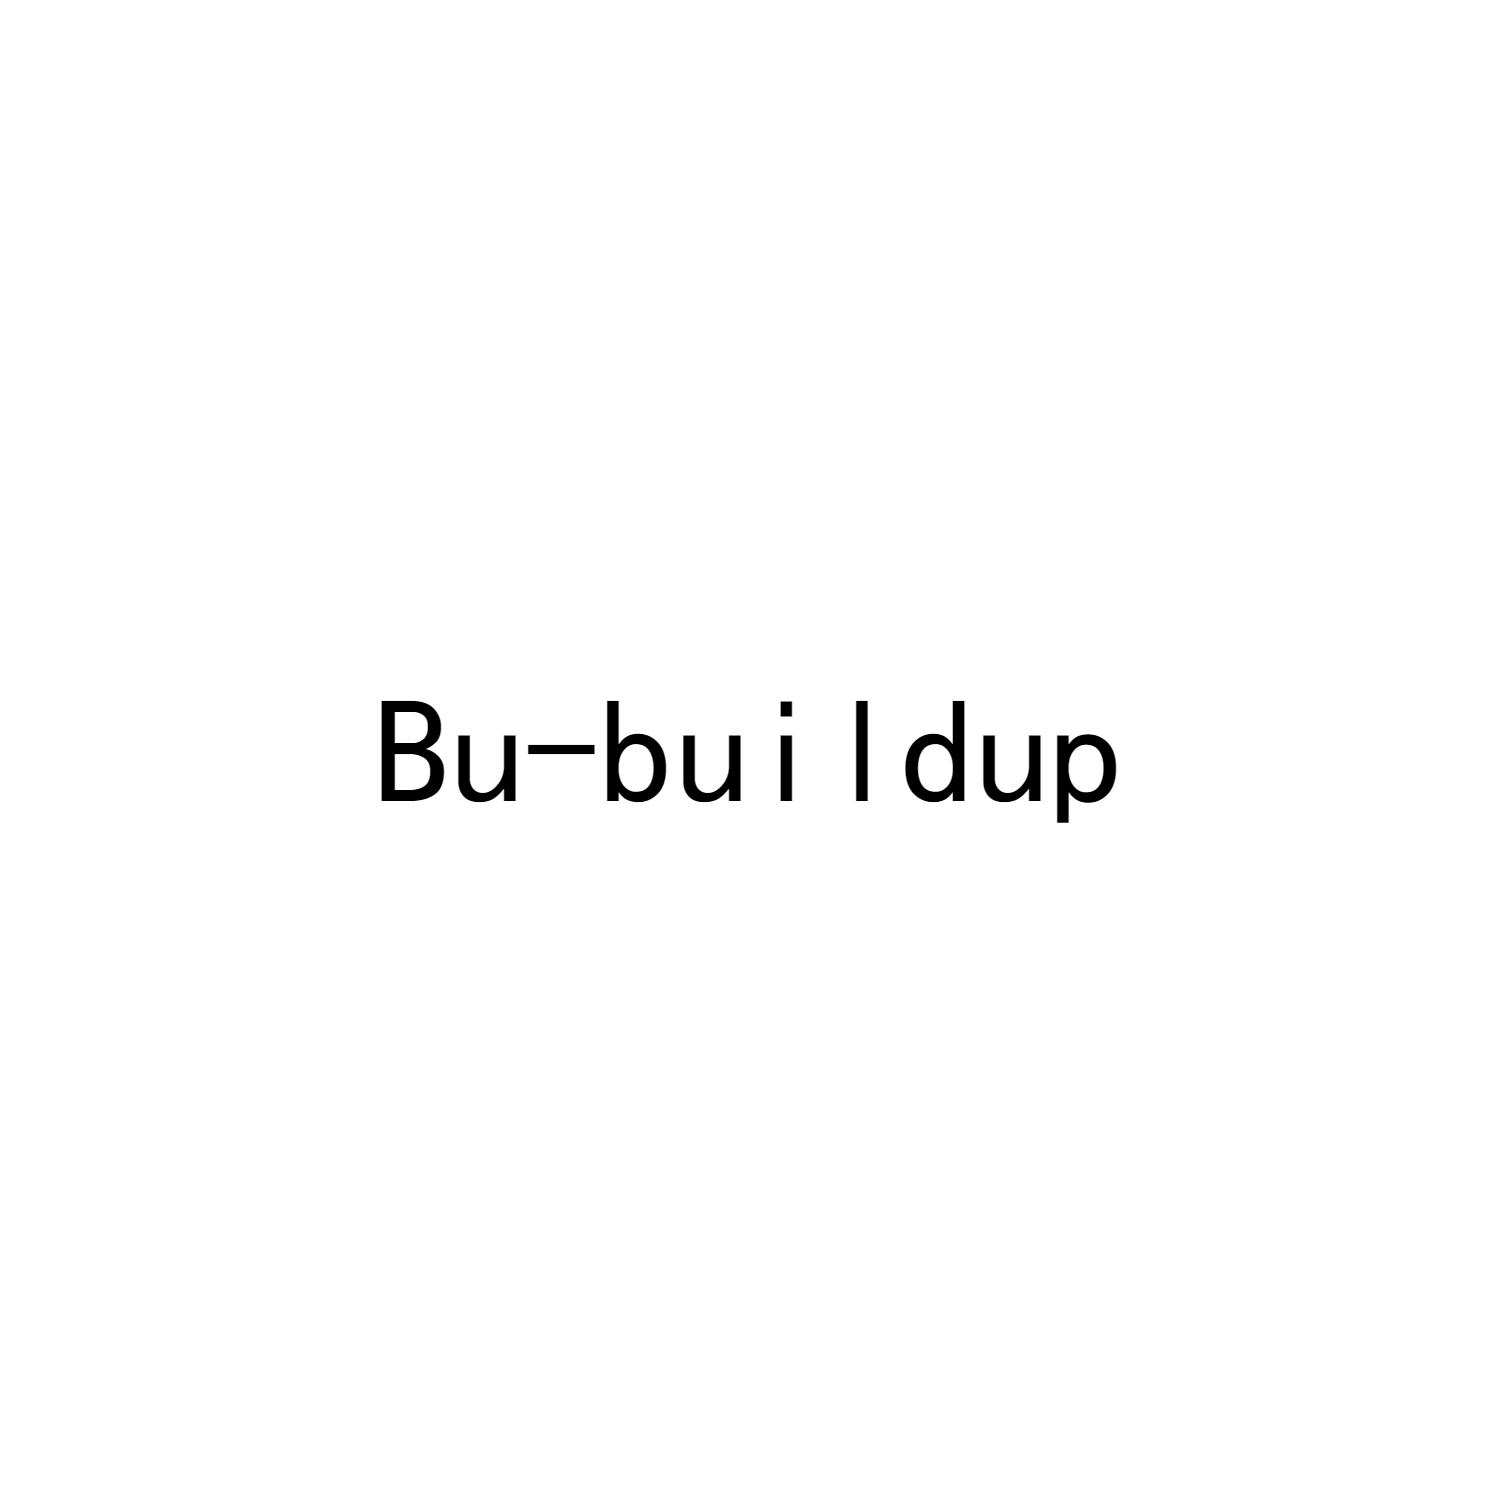 BU-BUILDUP